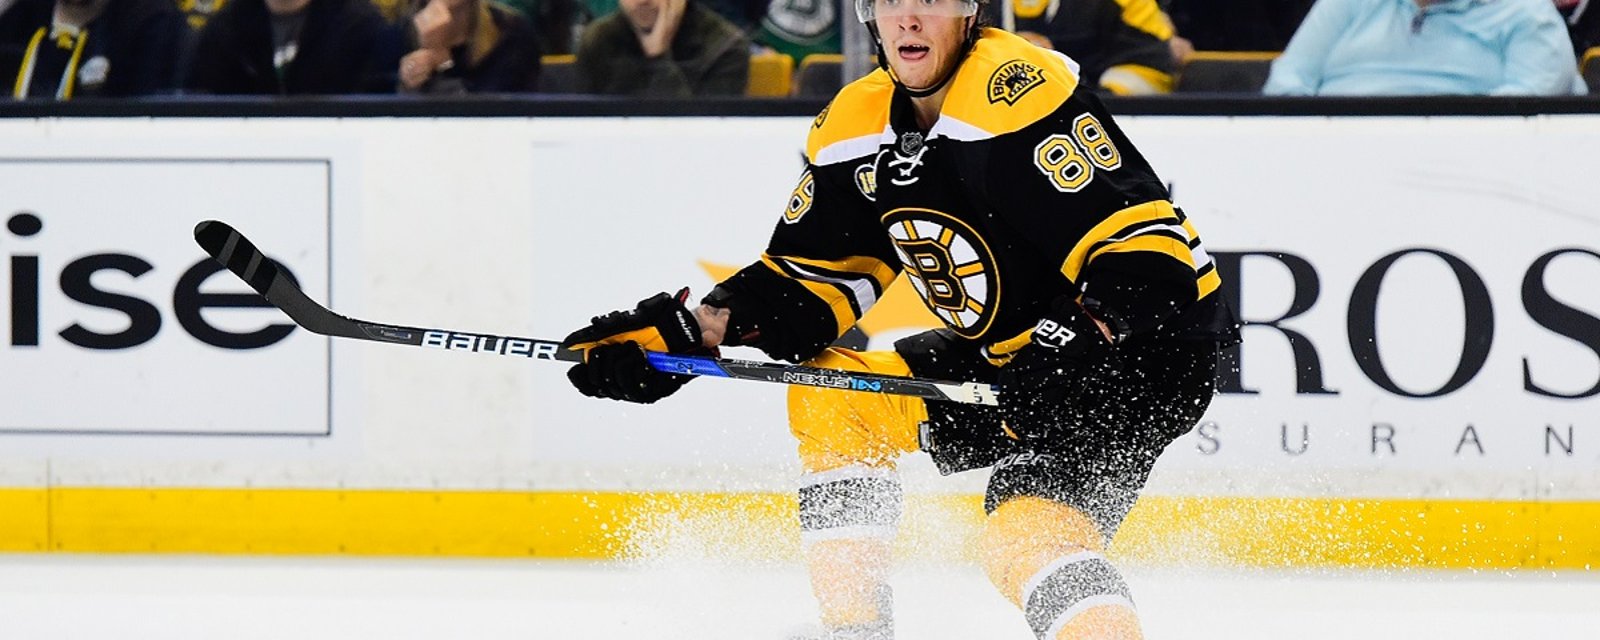 Report: Pastrnak snubs Bruins ahead of training camp